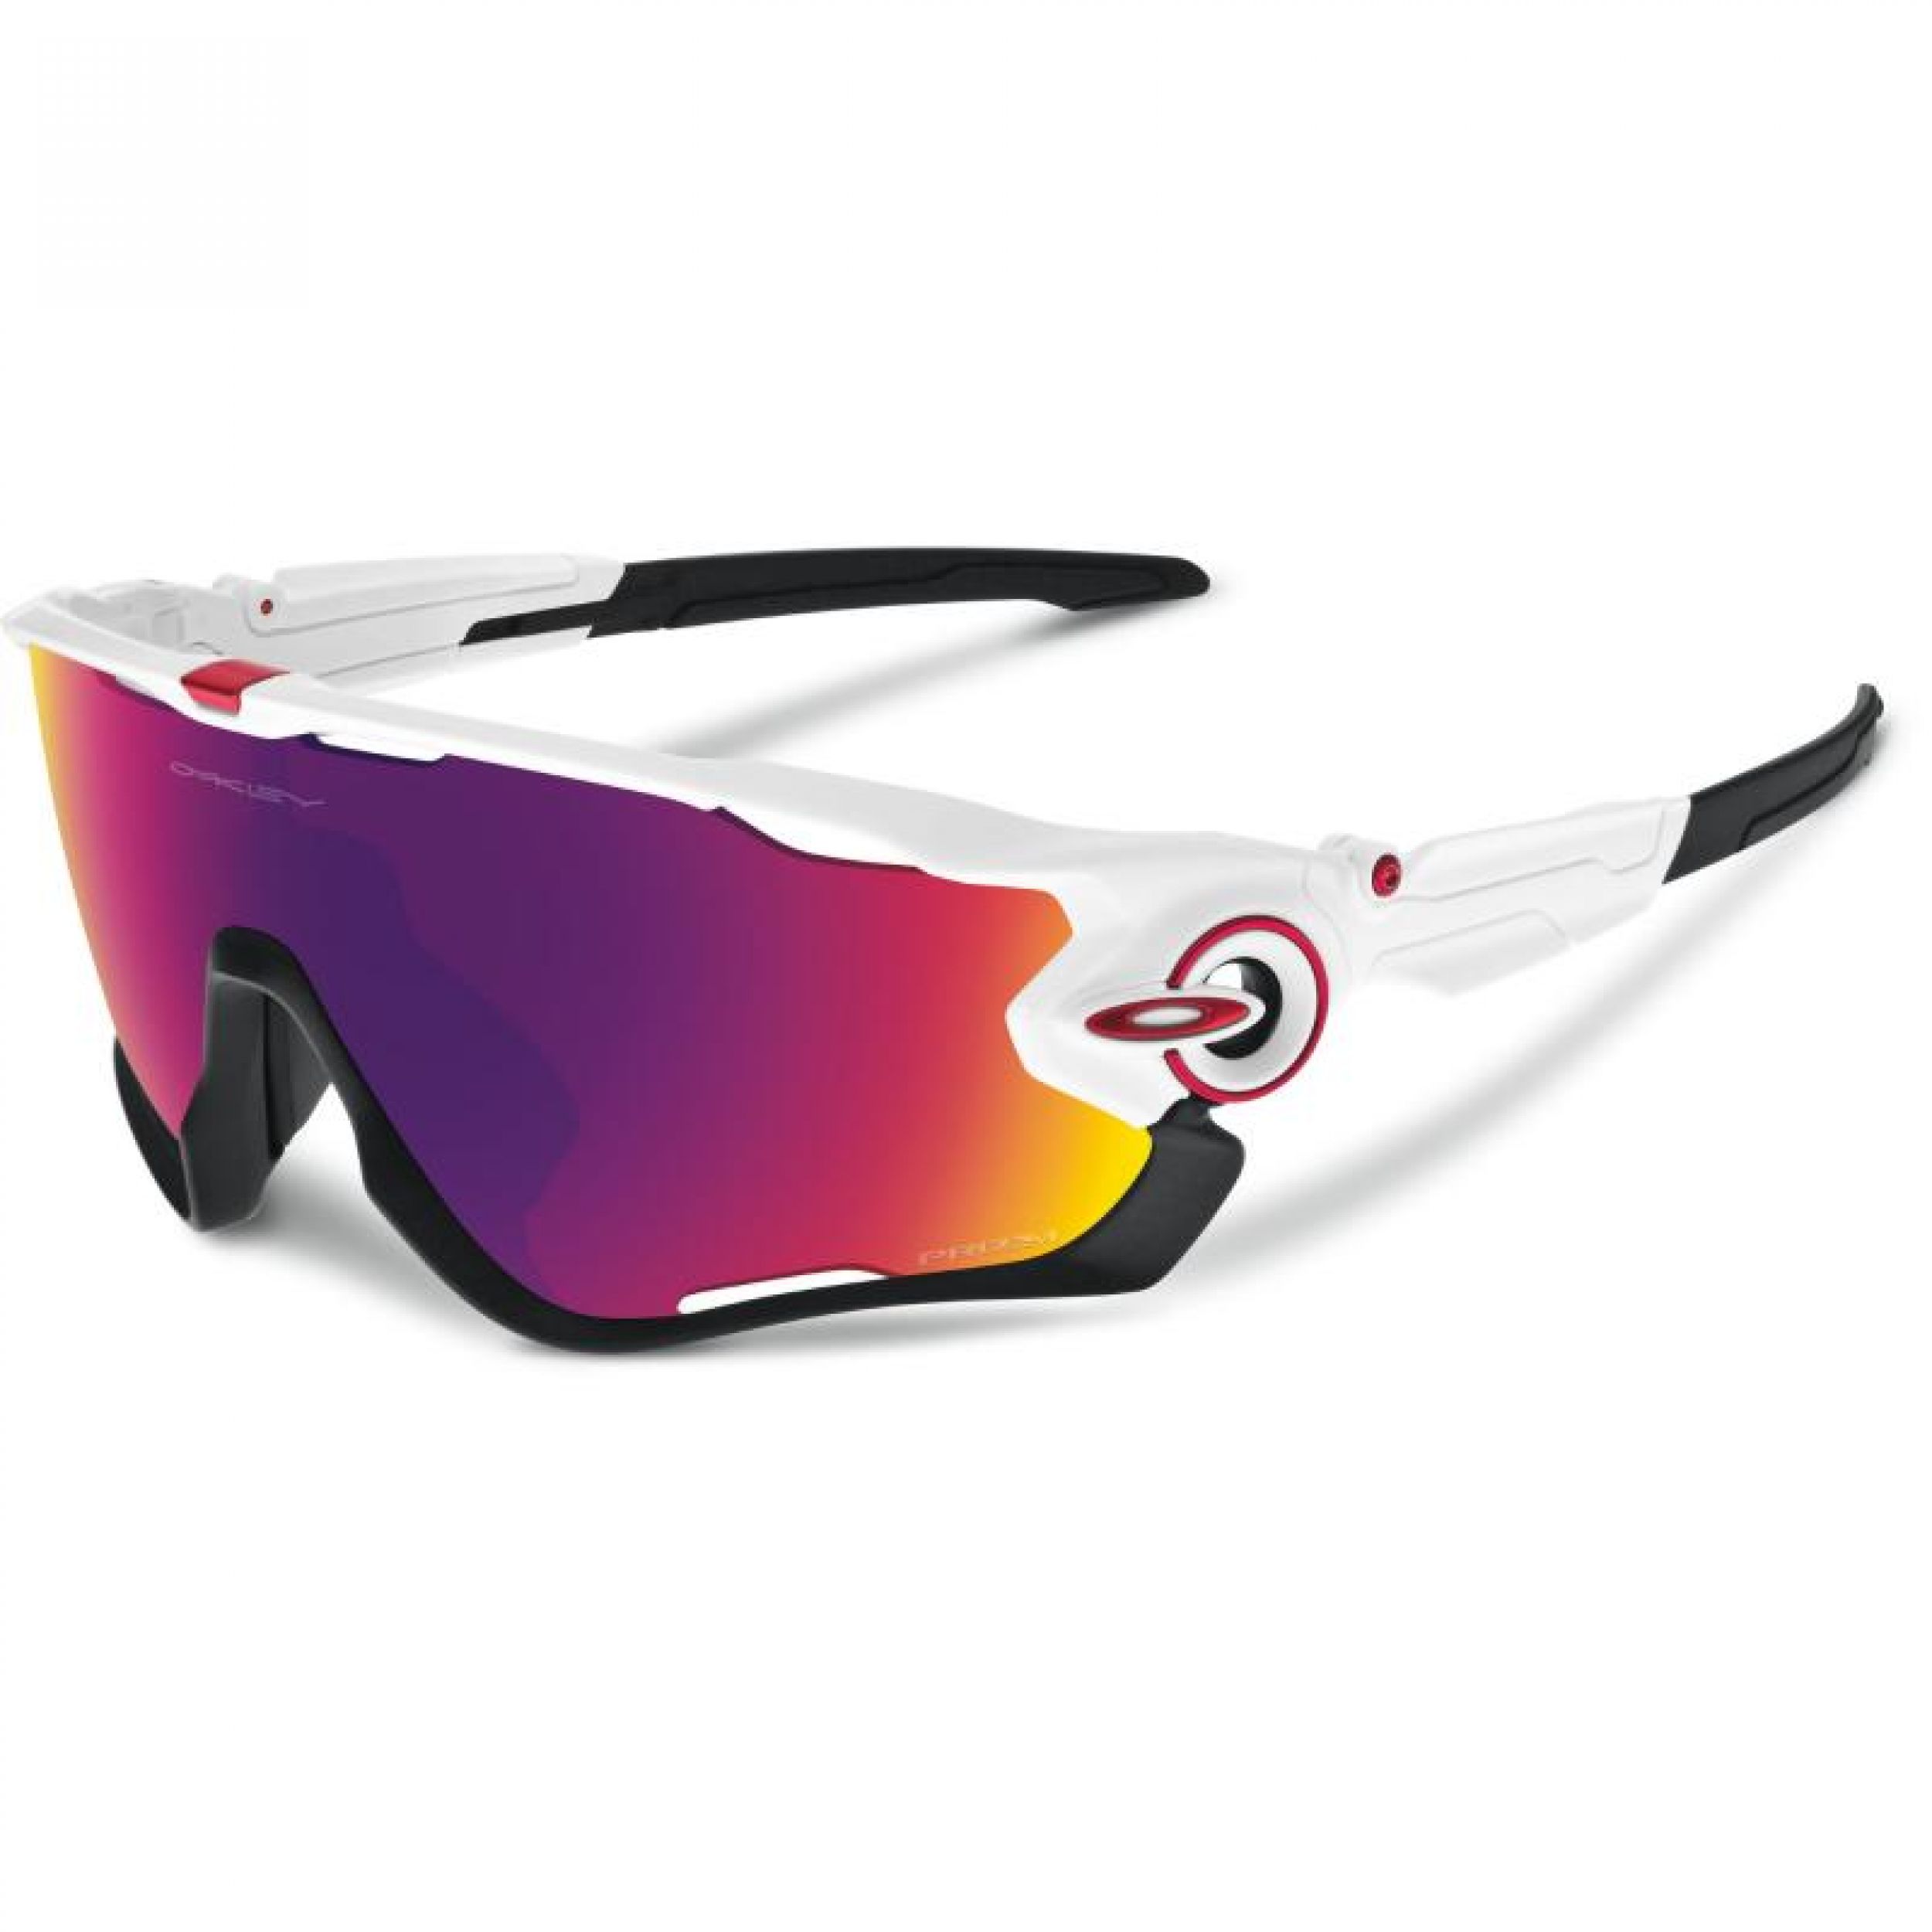 Oakley-Jawbreaker-Prizm-Road-Sunglasses-Performance-Sunglasses-Polished-White-2015-OO9290-05.jpg